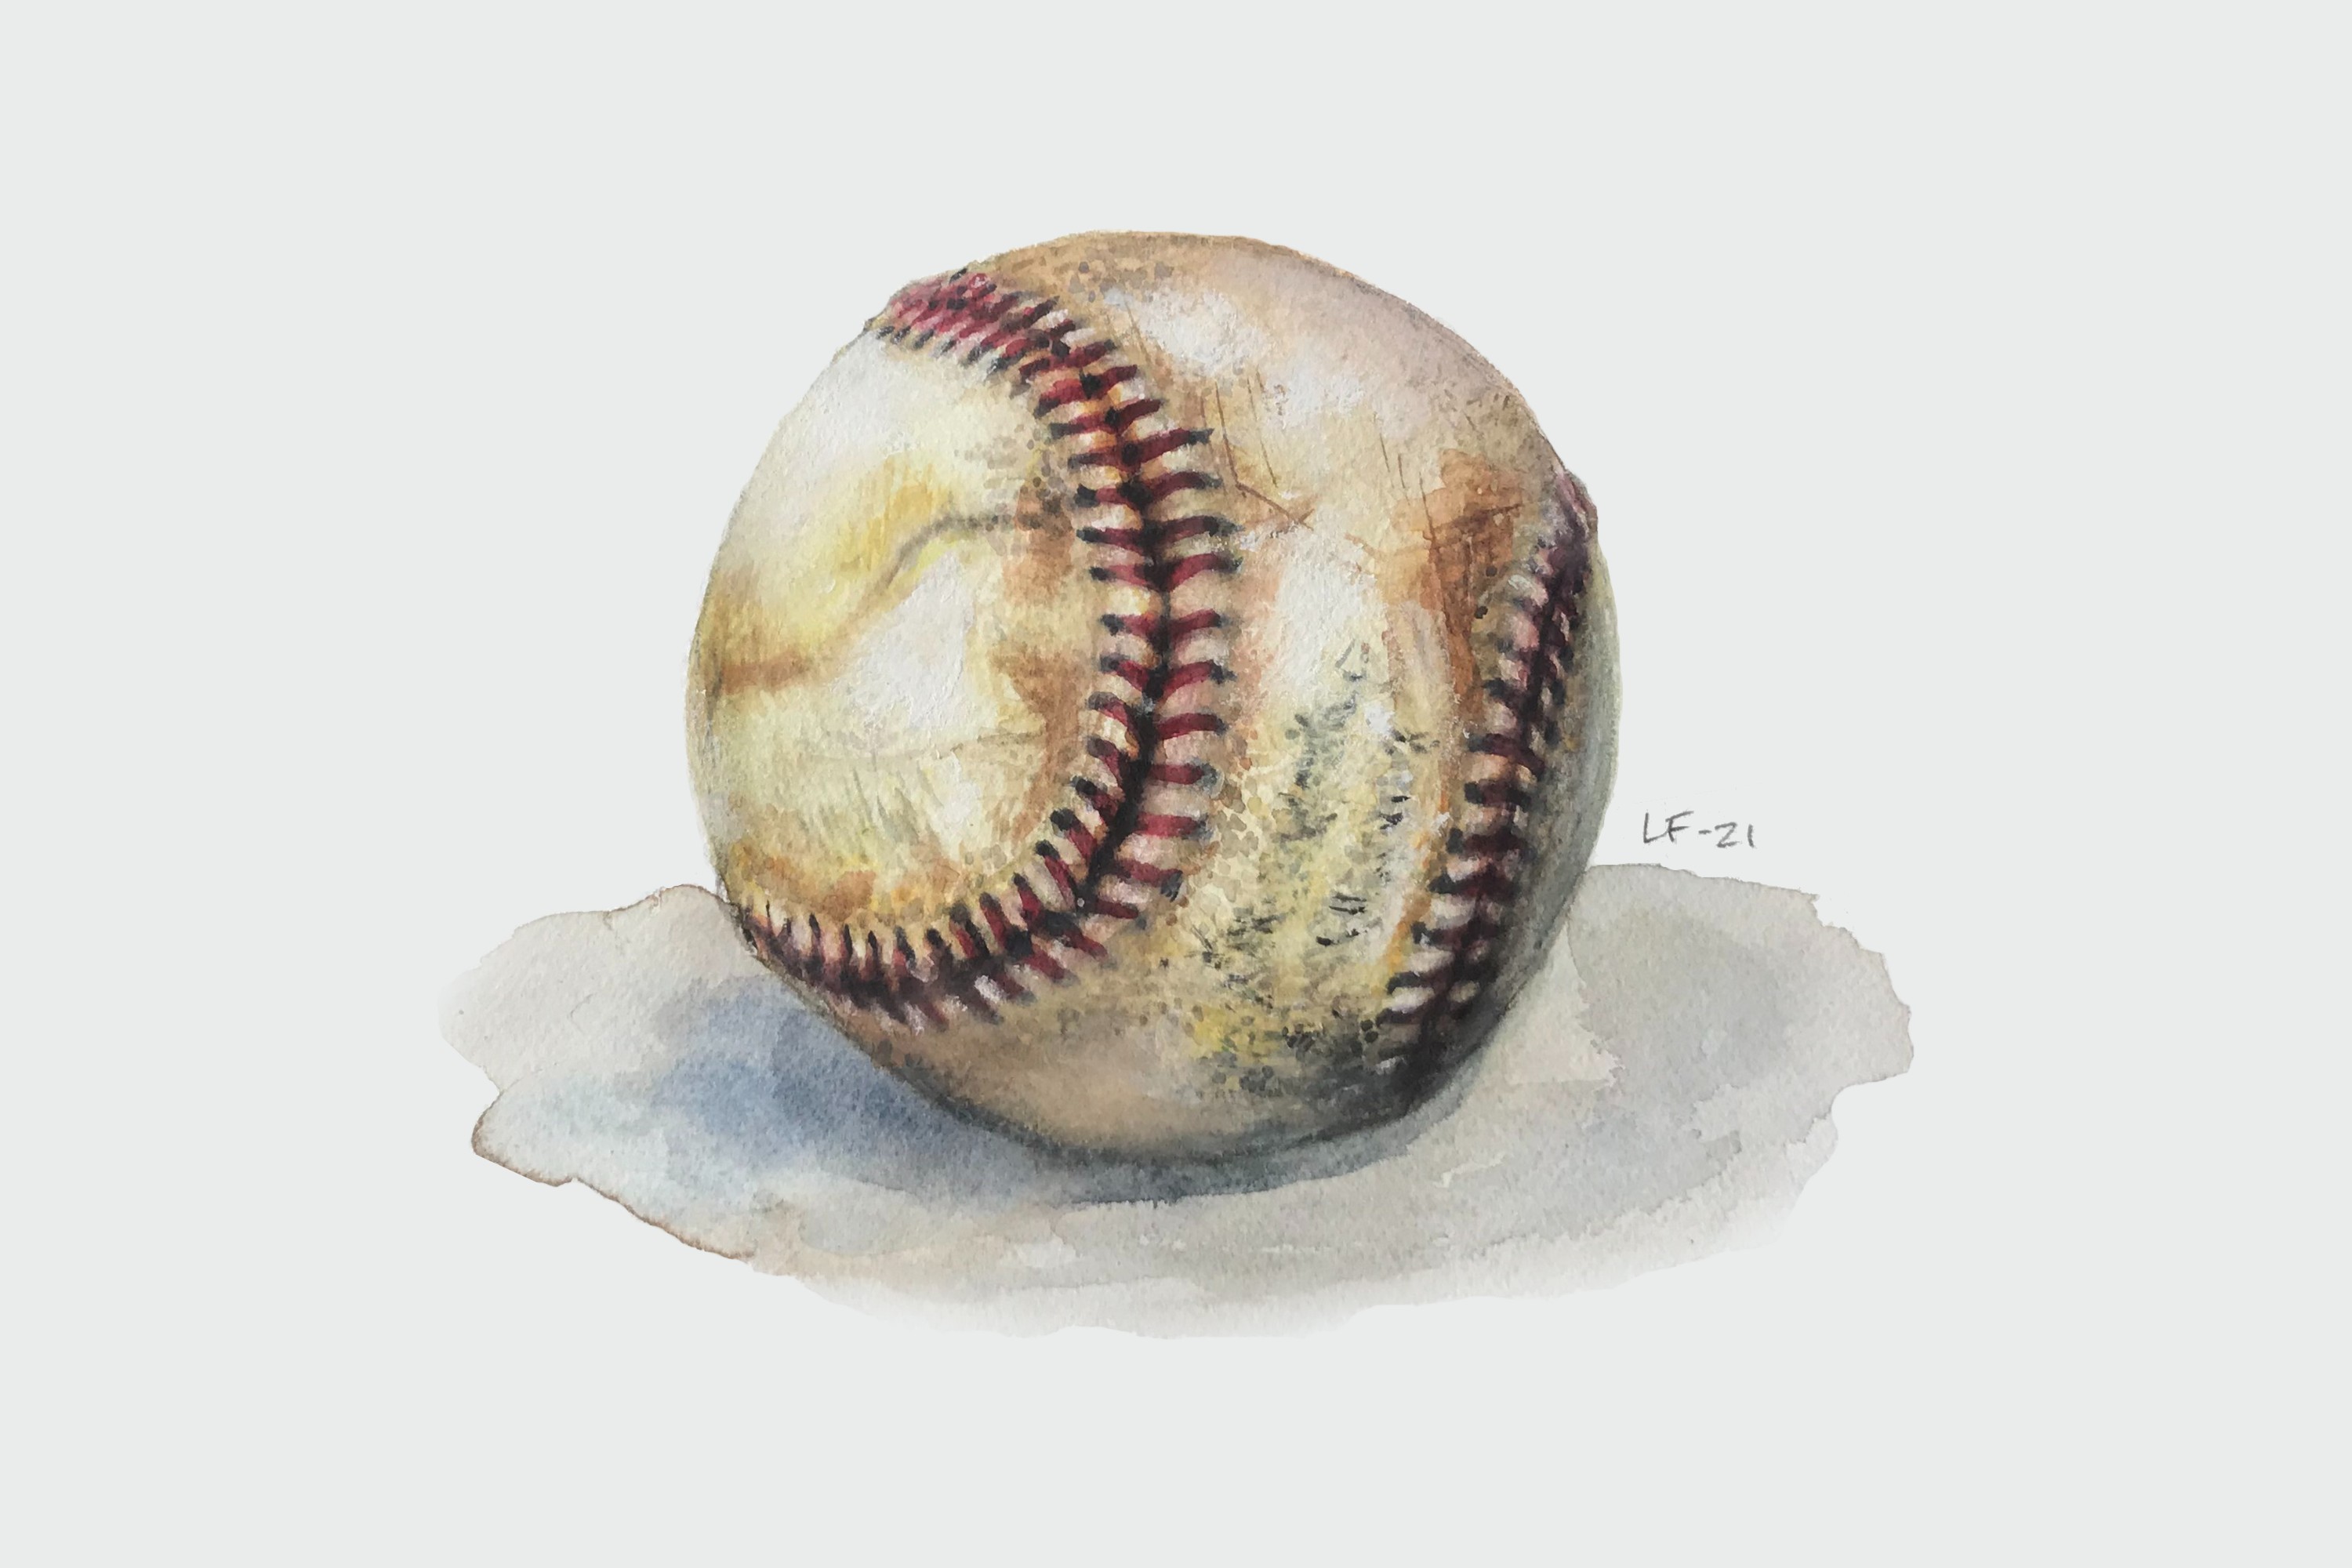 #1 The Baseball